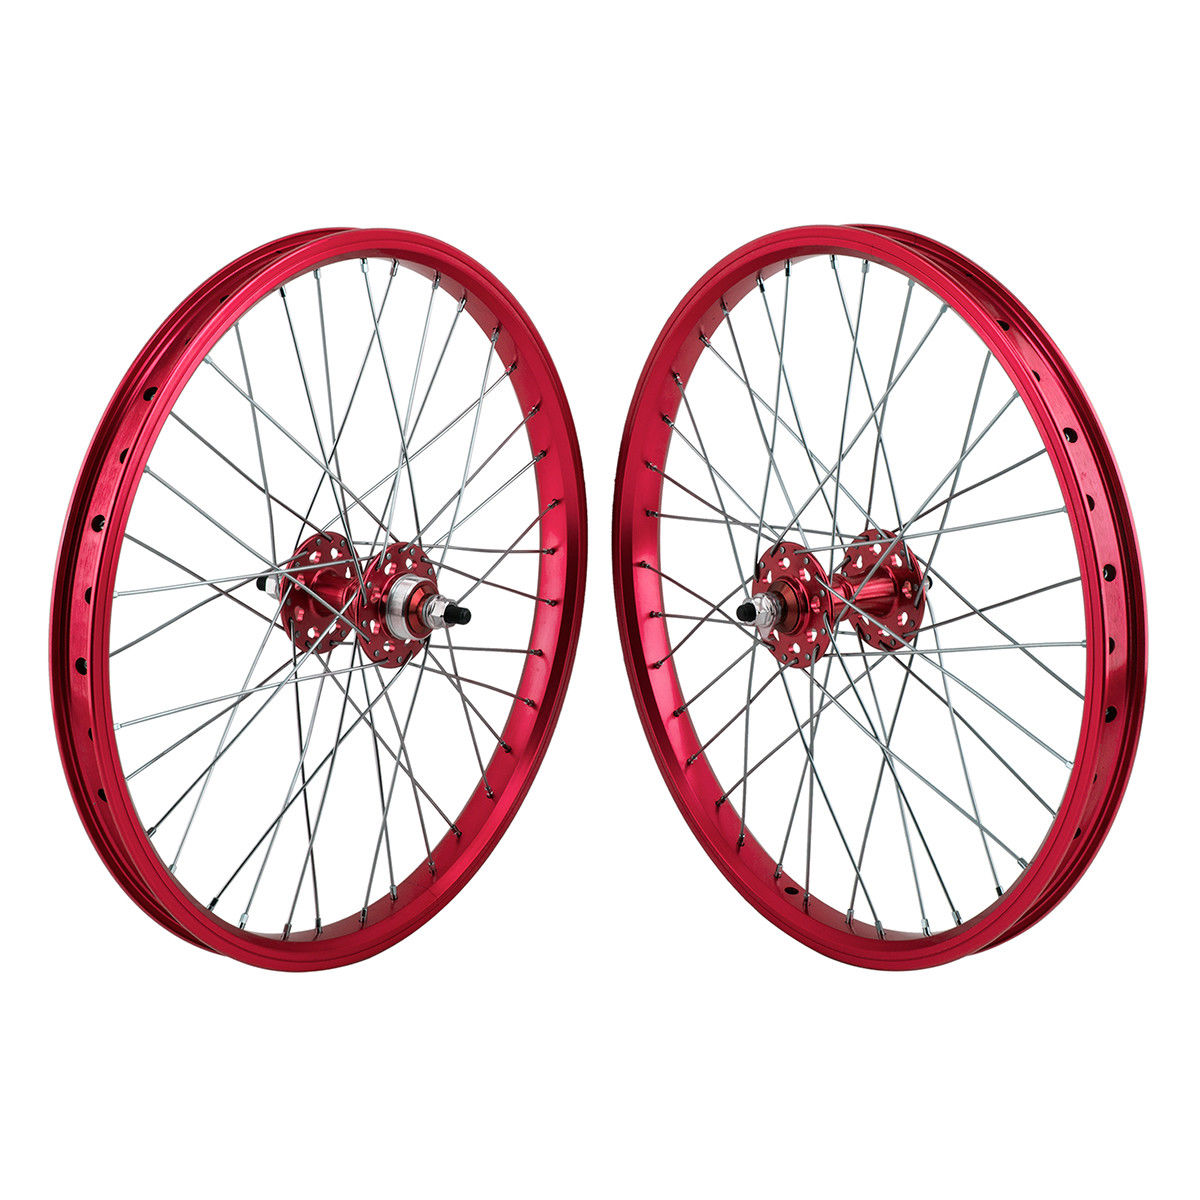 20" SE Racing Wheelset - Pair - 36H - Double Wall - Sealed Bearing - Freewheel - Red